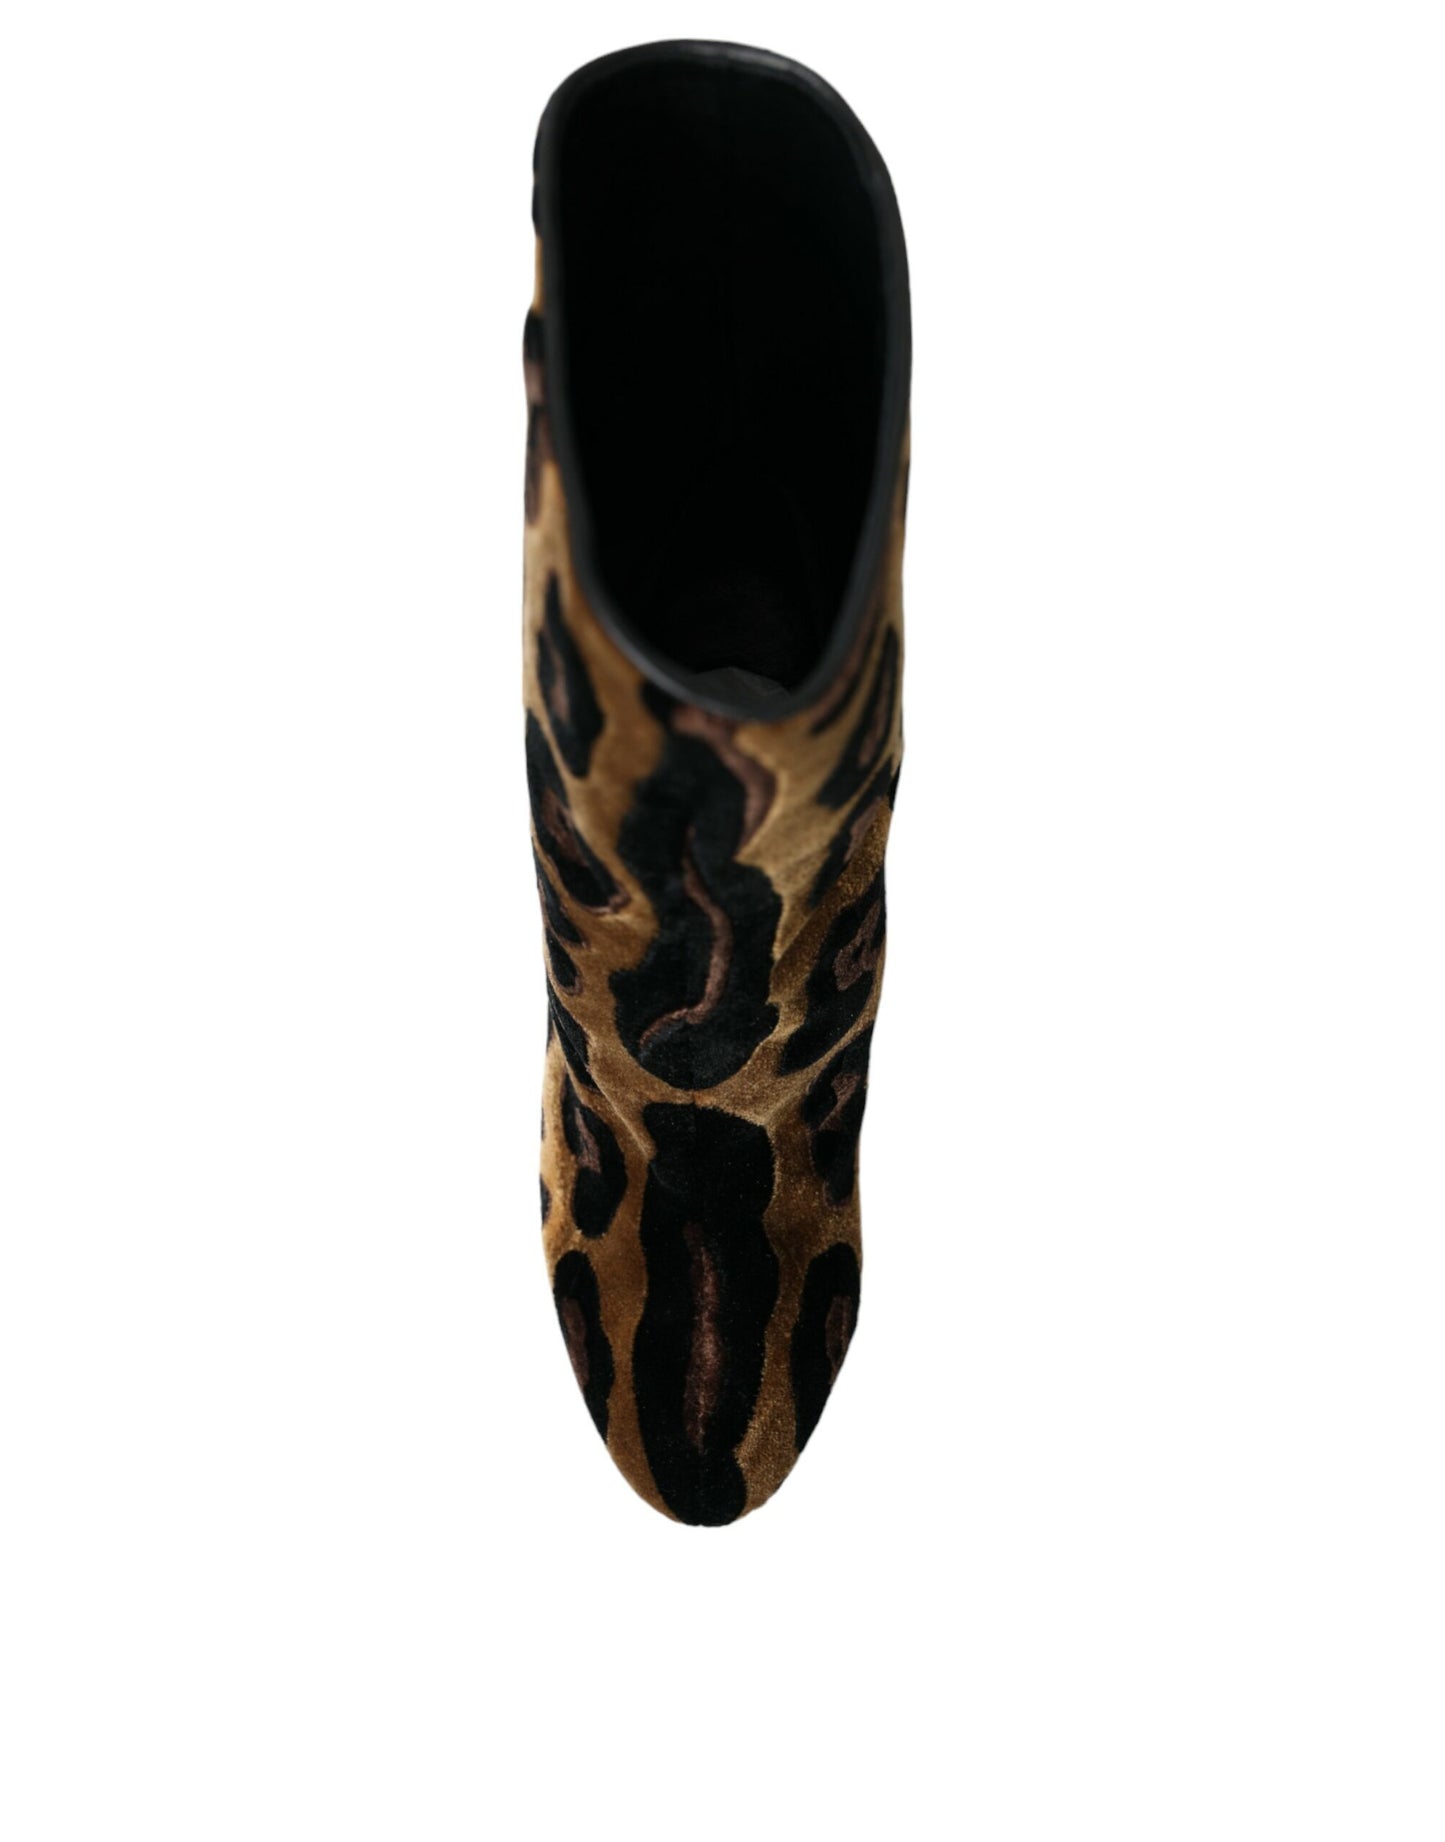 Dolce & Gabbana Brown Giraffe Leather Mid Calf Boots Shoes